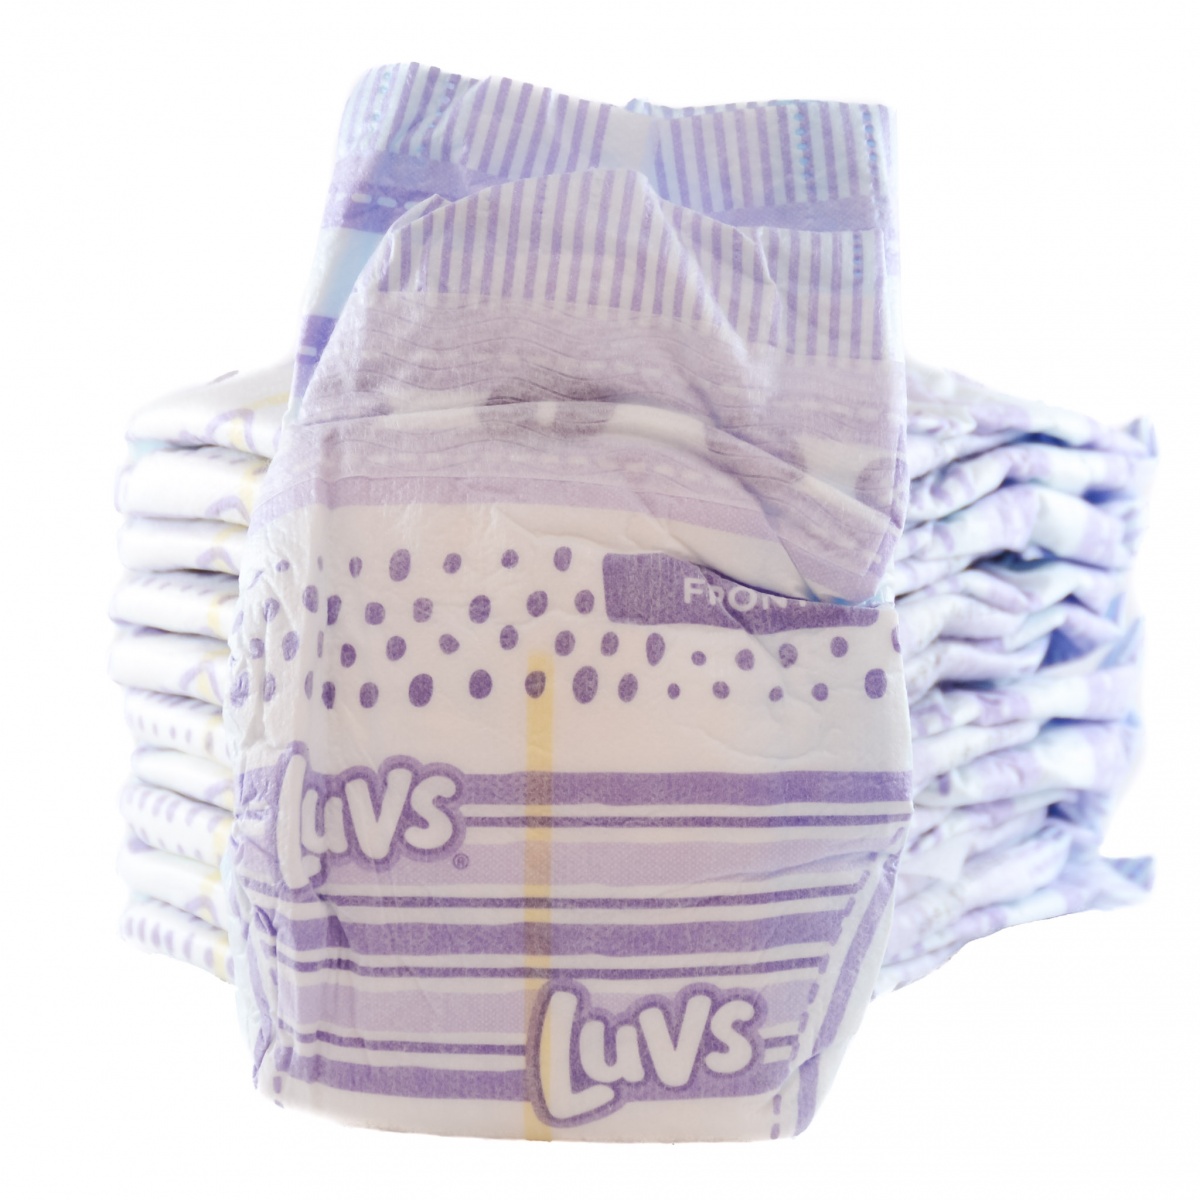 luvs disposable diaper review